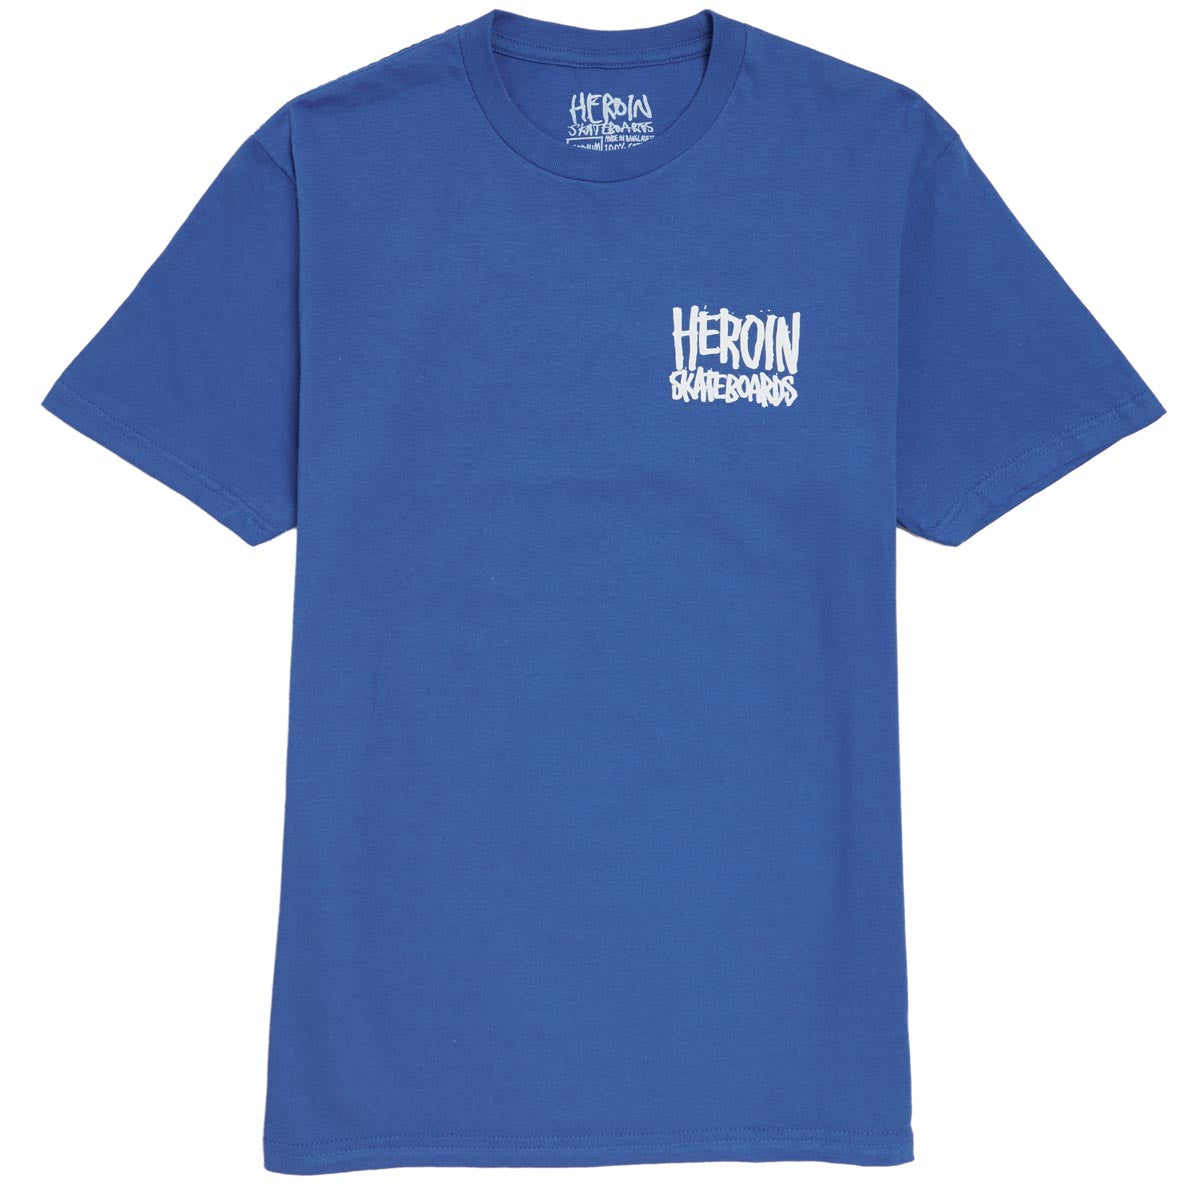 Heroin Fuck Drugs T-Shirt - Royal Blue image 2